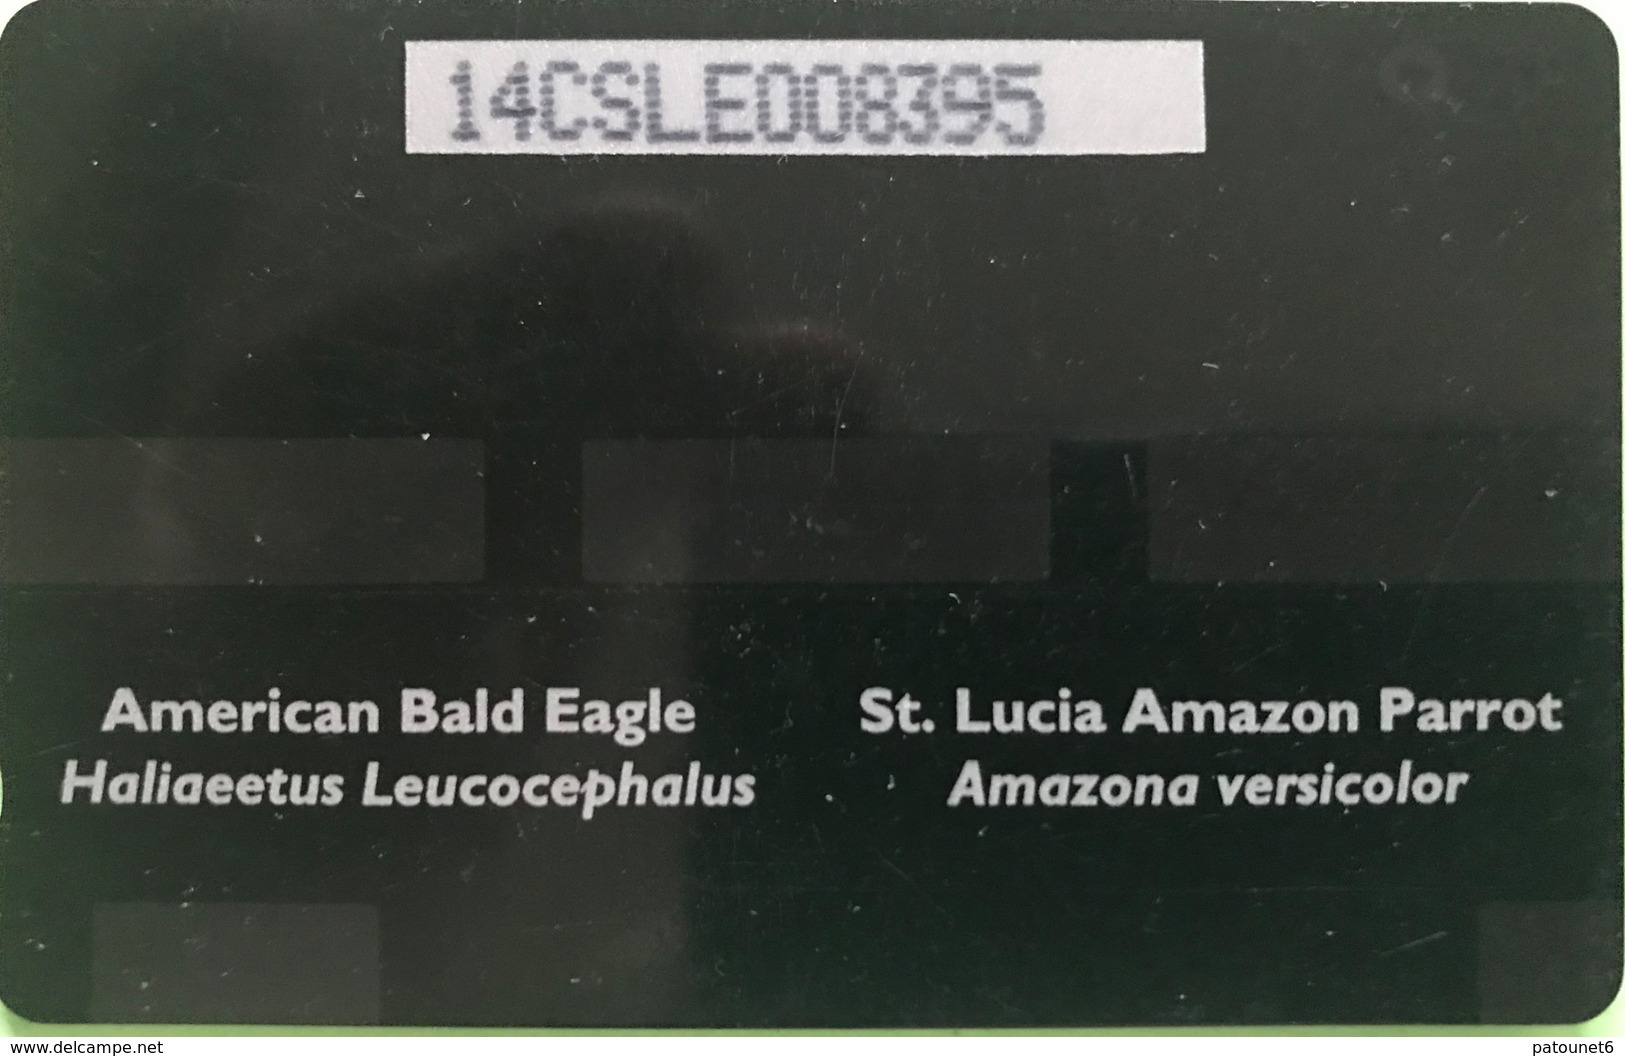 SAINTE LUCIE  -  Phonecard  - Cable & Wireless   -  Eagle And Amazon  -  EC $ 53  -  US $ 20 - Saint Lucia